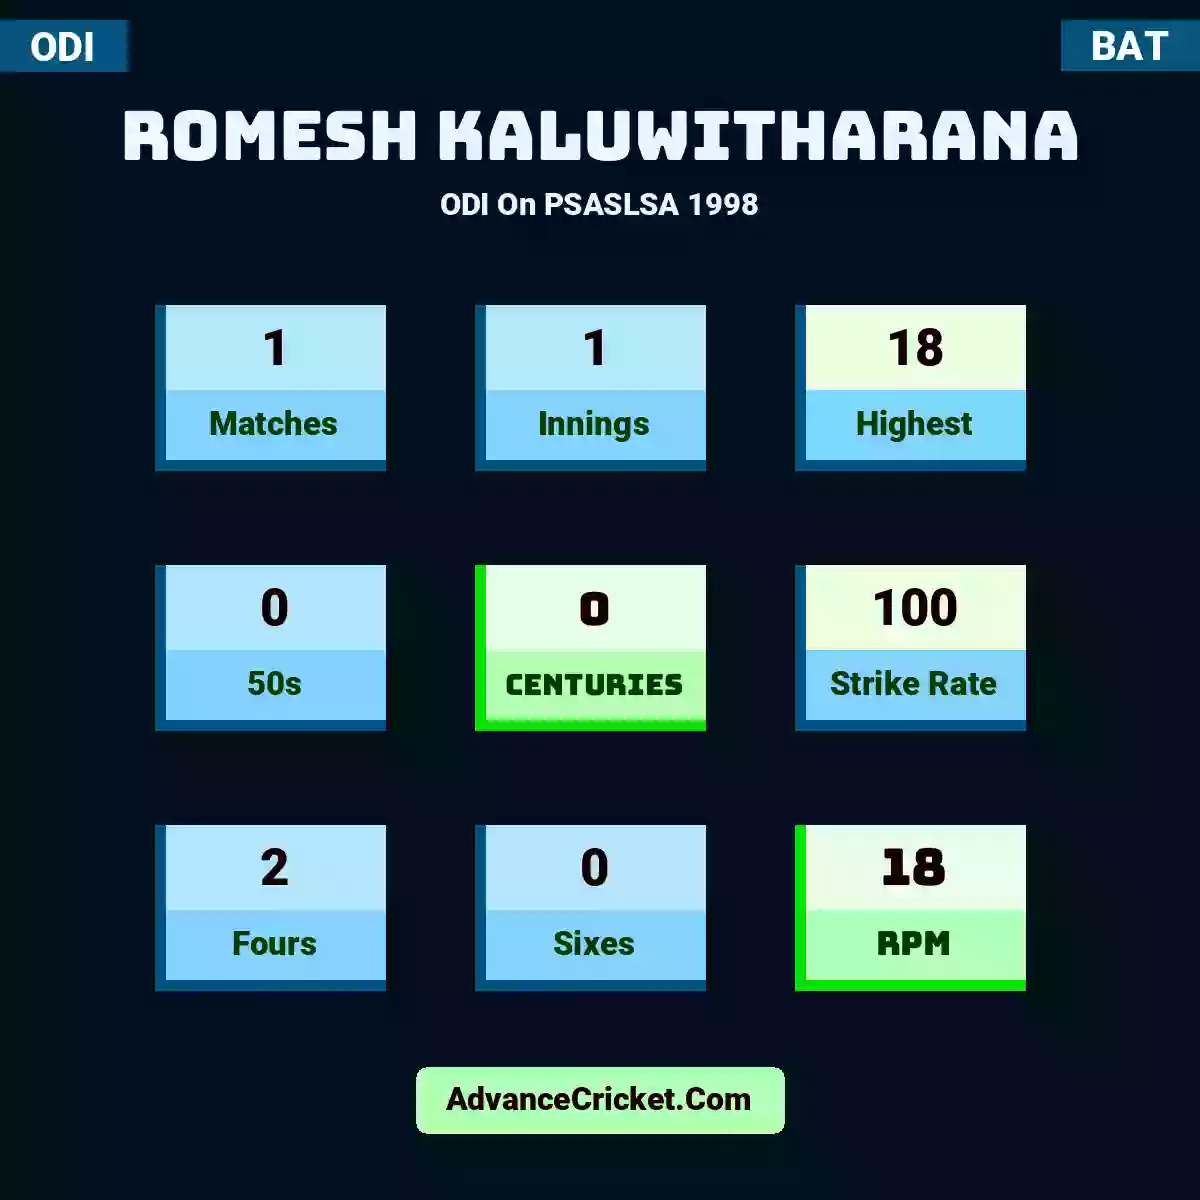 Romesh Kaluwitharana ODI  On PSASLSA 1998, Romesh Kaluwitharana played 1 matches, scored 18 runs as highest, 0 half-centuries, and 0 centuries, with a strike rate of 100. R.Kaluwitharana hit 2 fours and 0 sixes, with an RPM of 18.